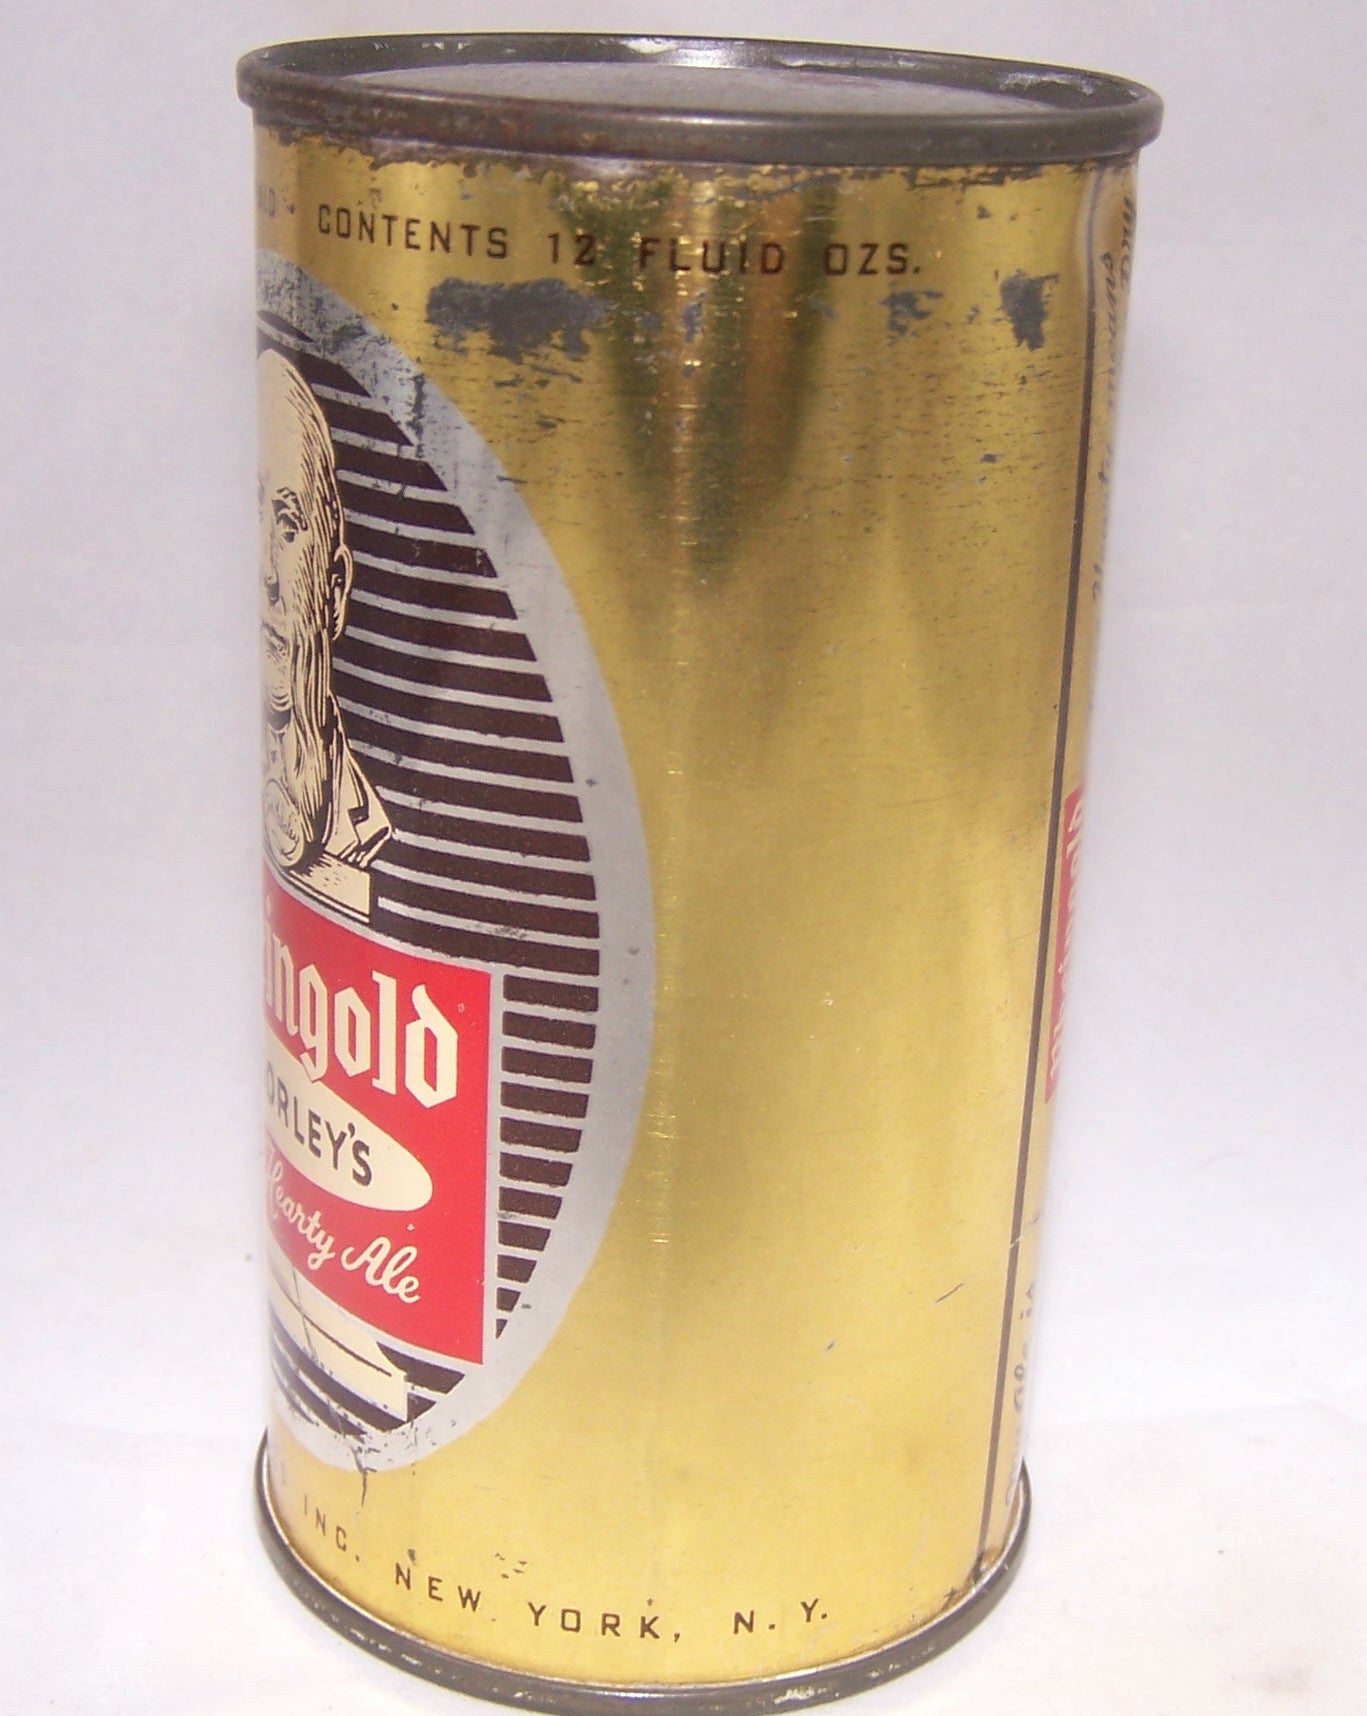 Rheingold McSorley's Hearty Ale, USBC 123-27, Grade 1- Sold 4/7/17